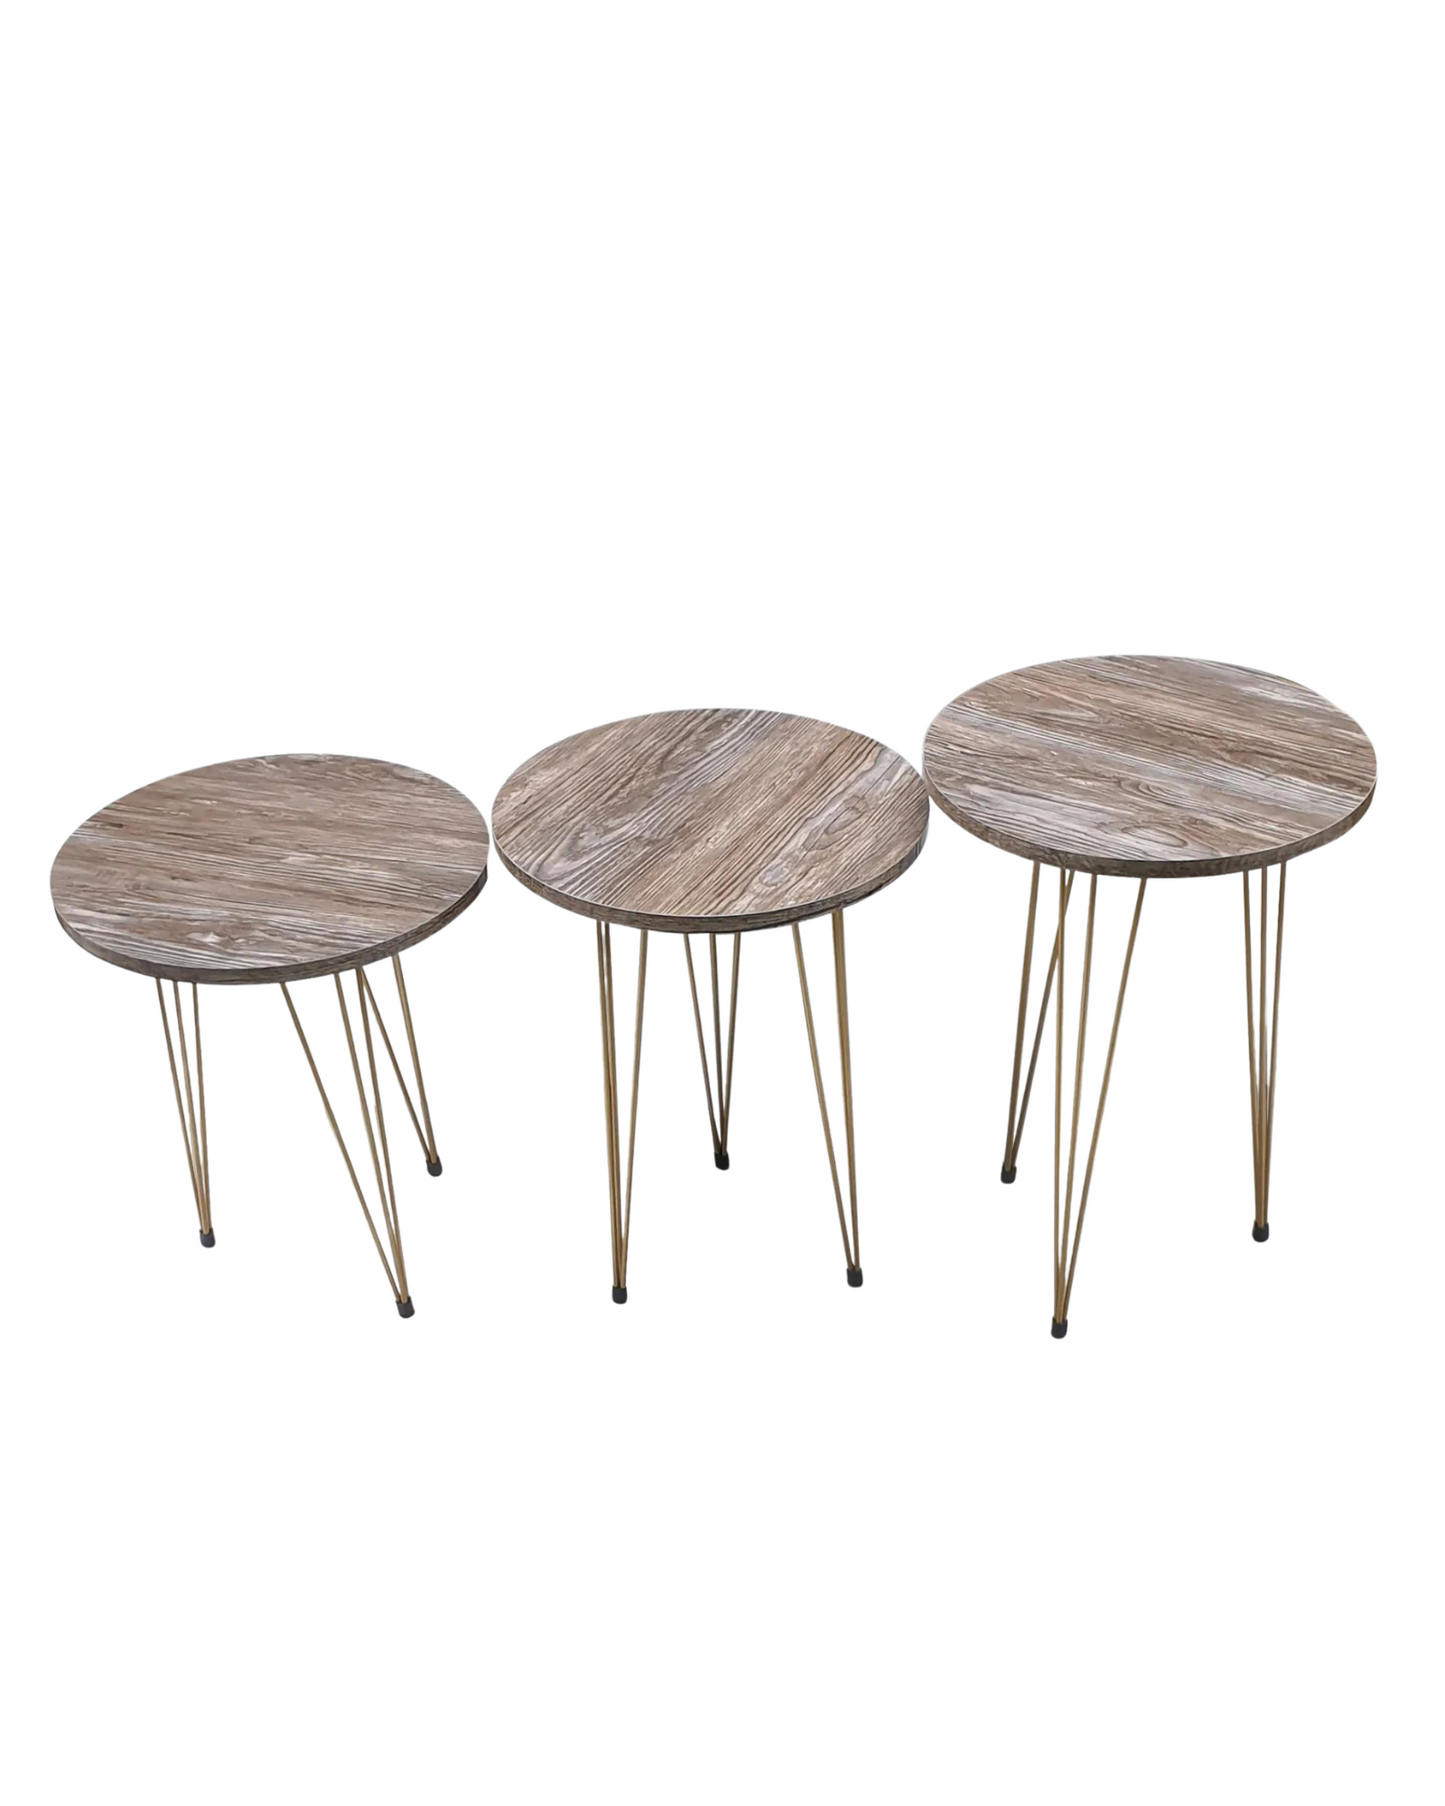 Set of 3 Nesting Tables Wooden Design Top